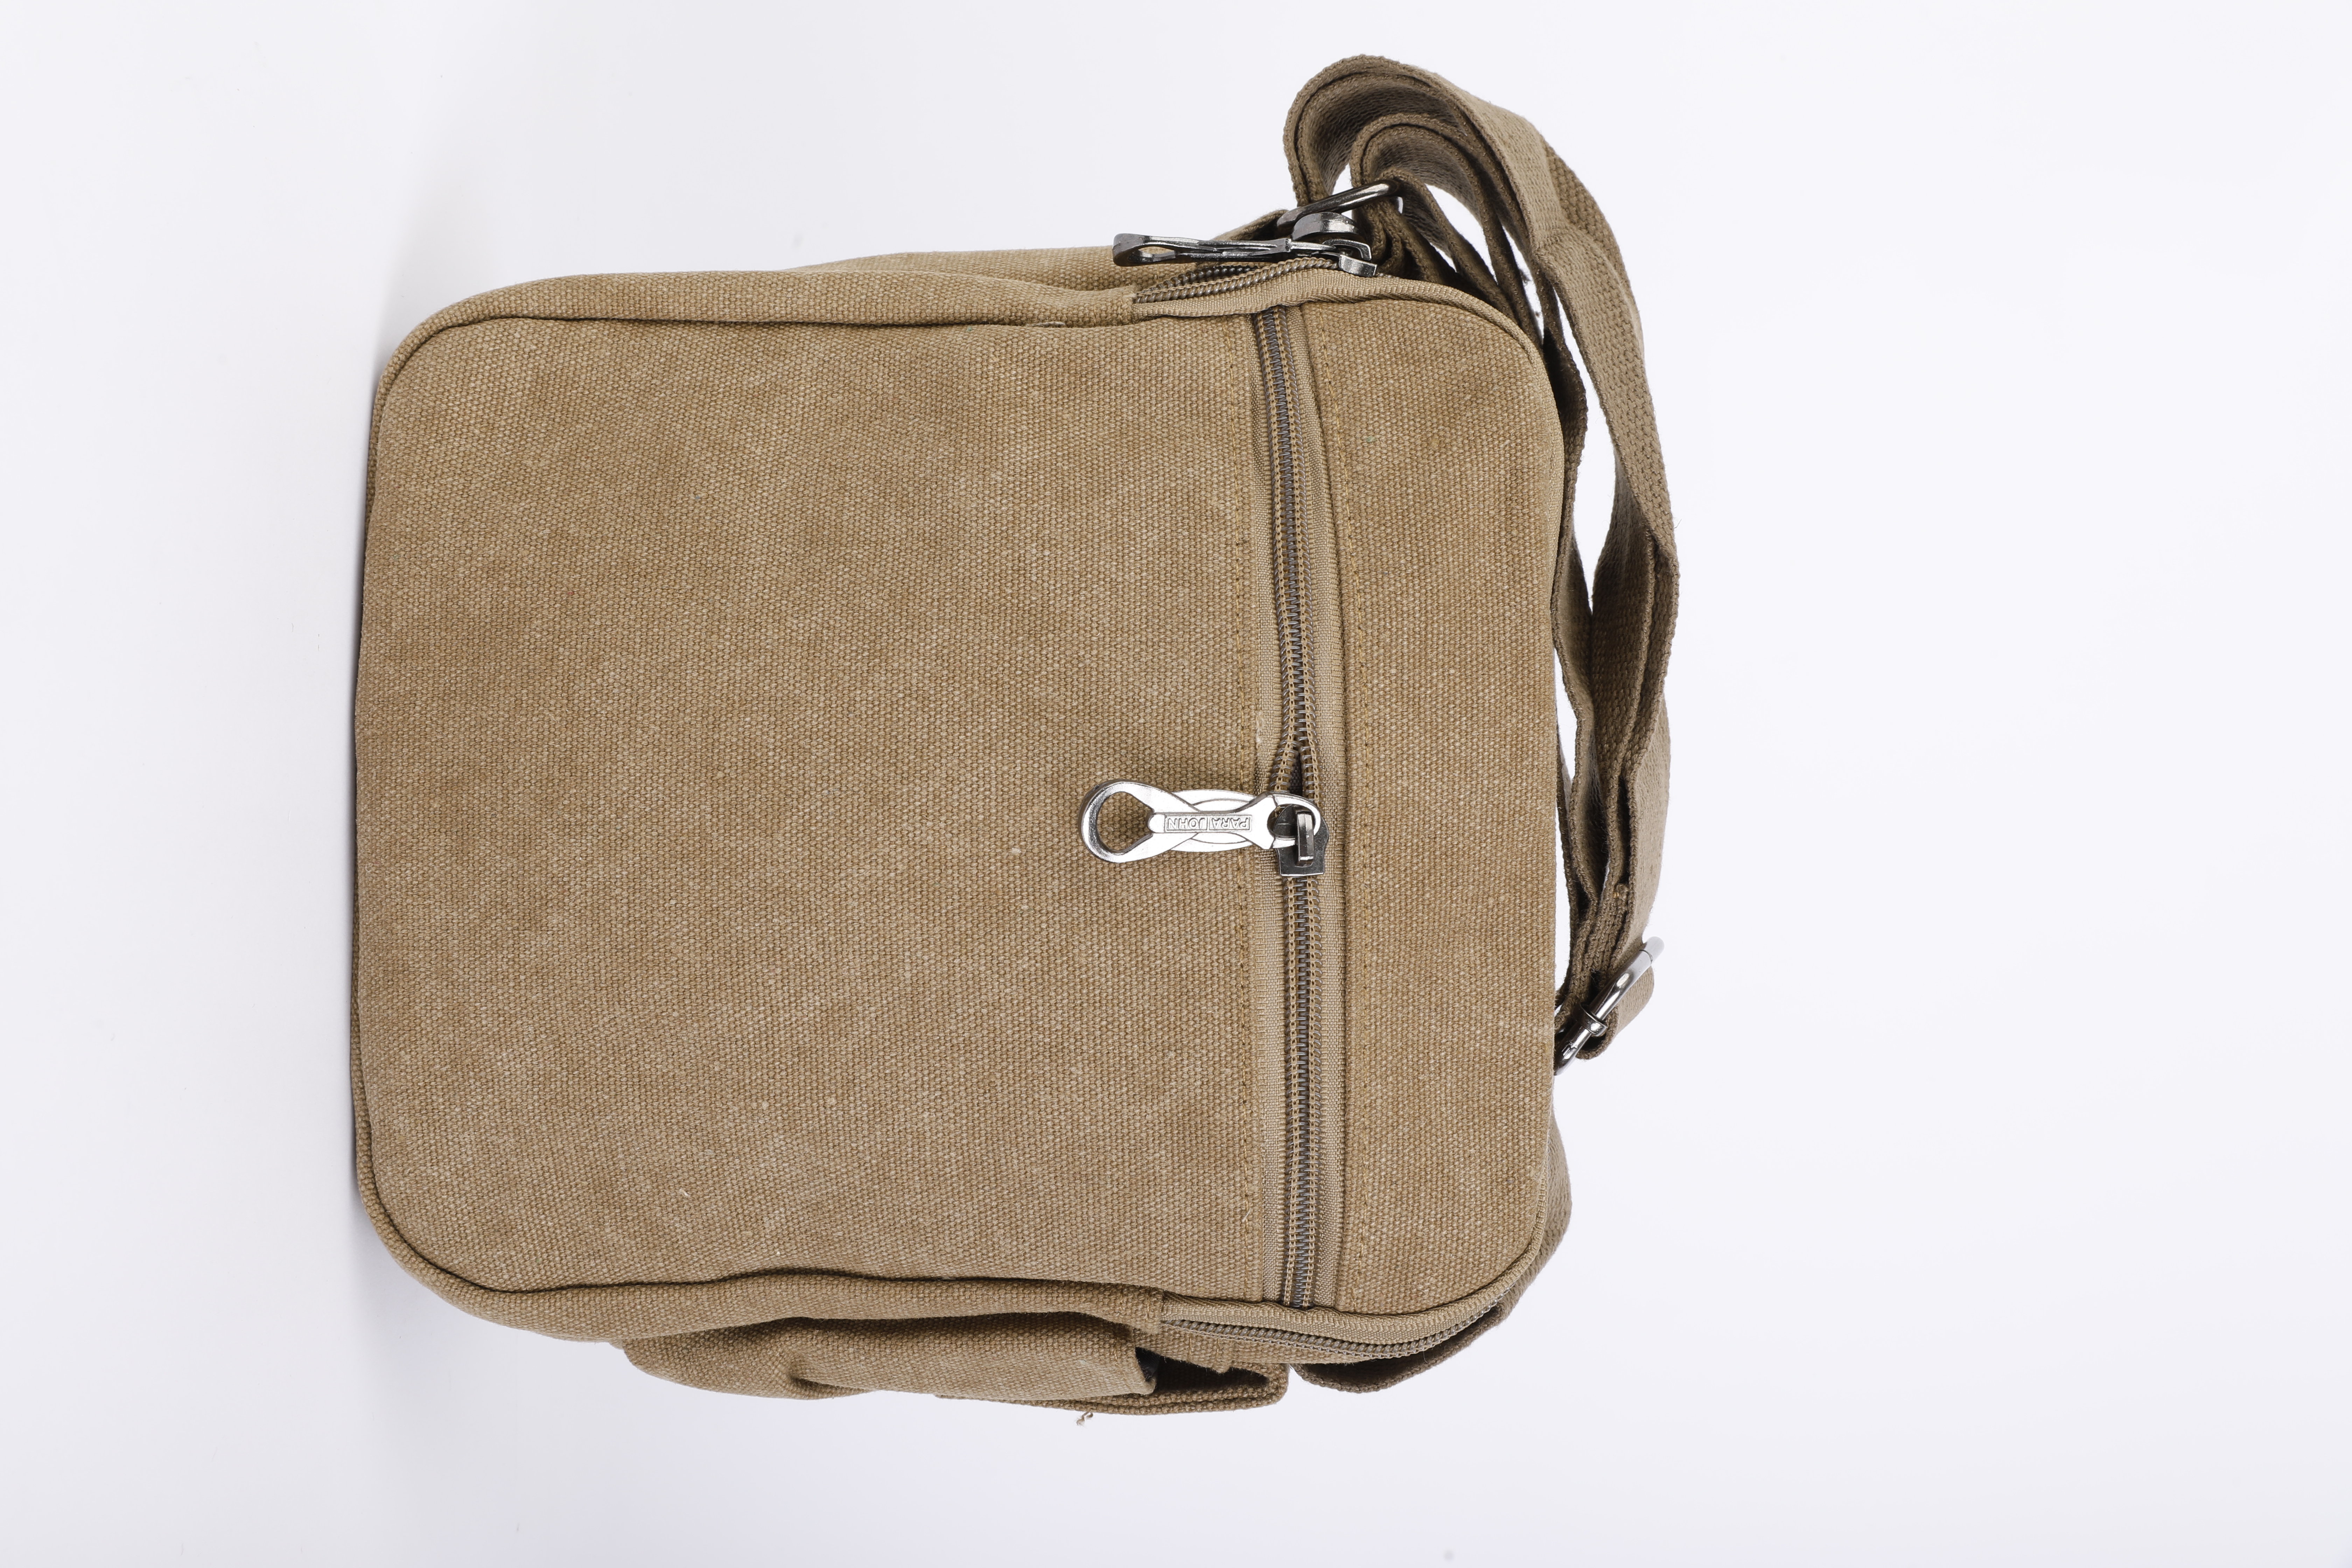 PARA JOHN Canvas Office Shoulder Bag - Multipurpose Mini Shoulder/Travel  Utility Work Bag - Phone/Passport Pouch Bag - Ideal Men and Women 